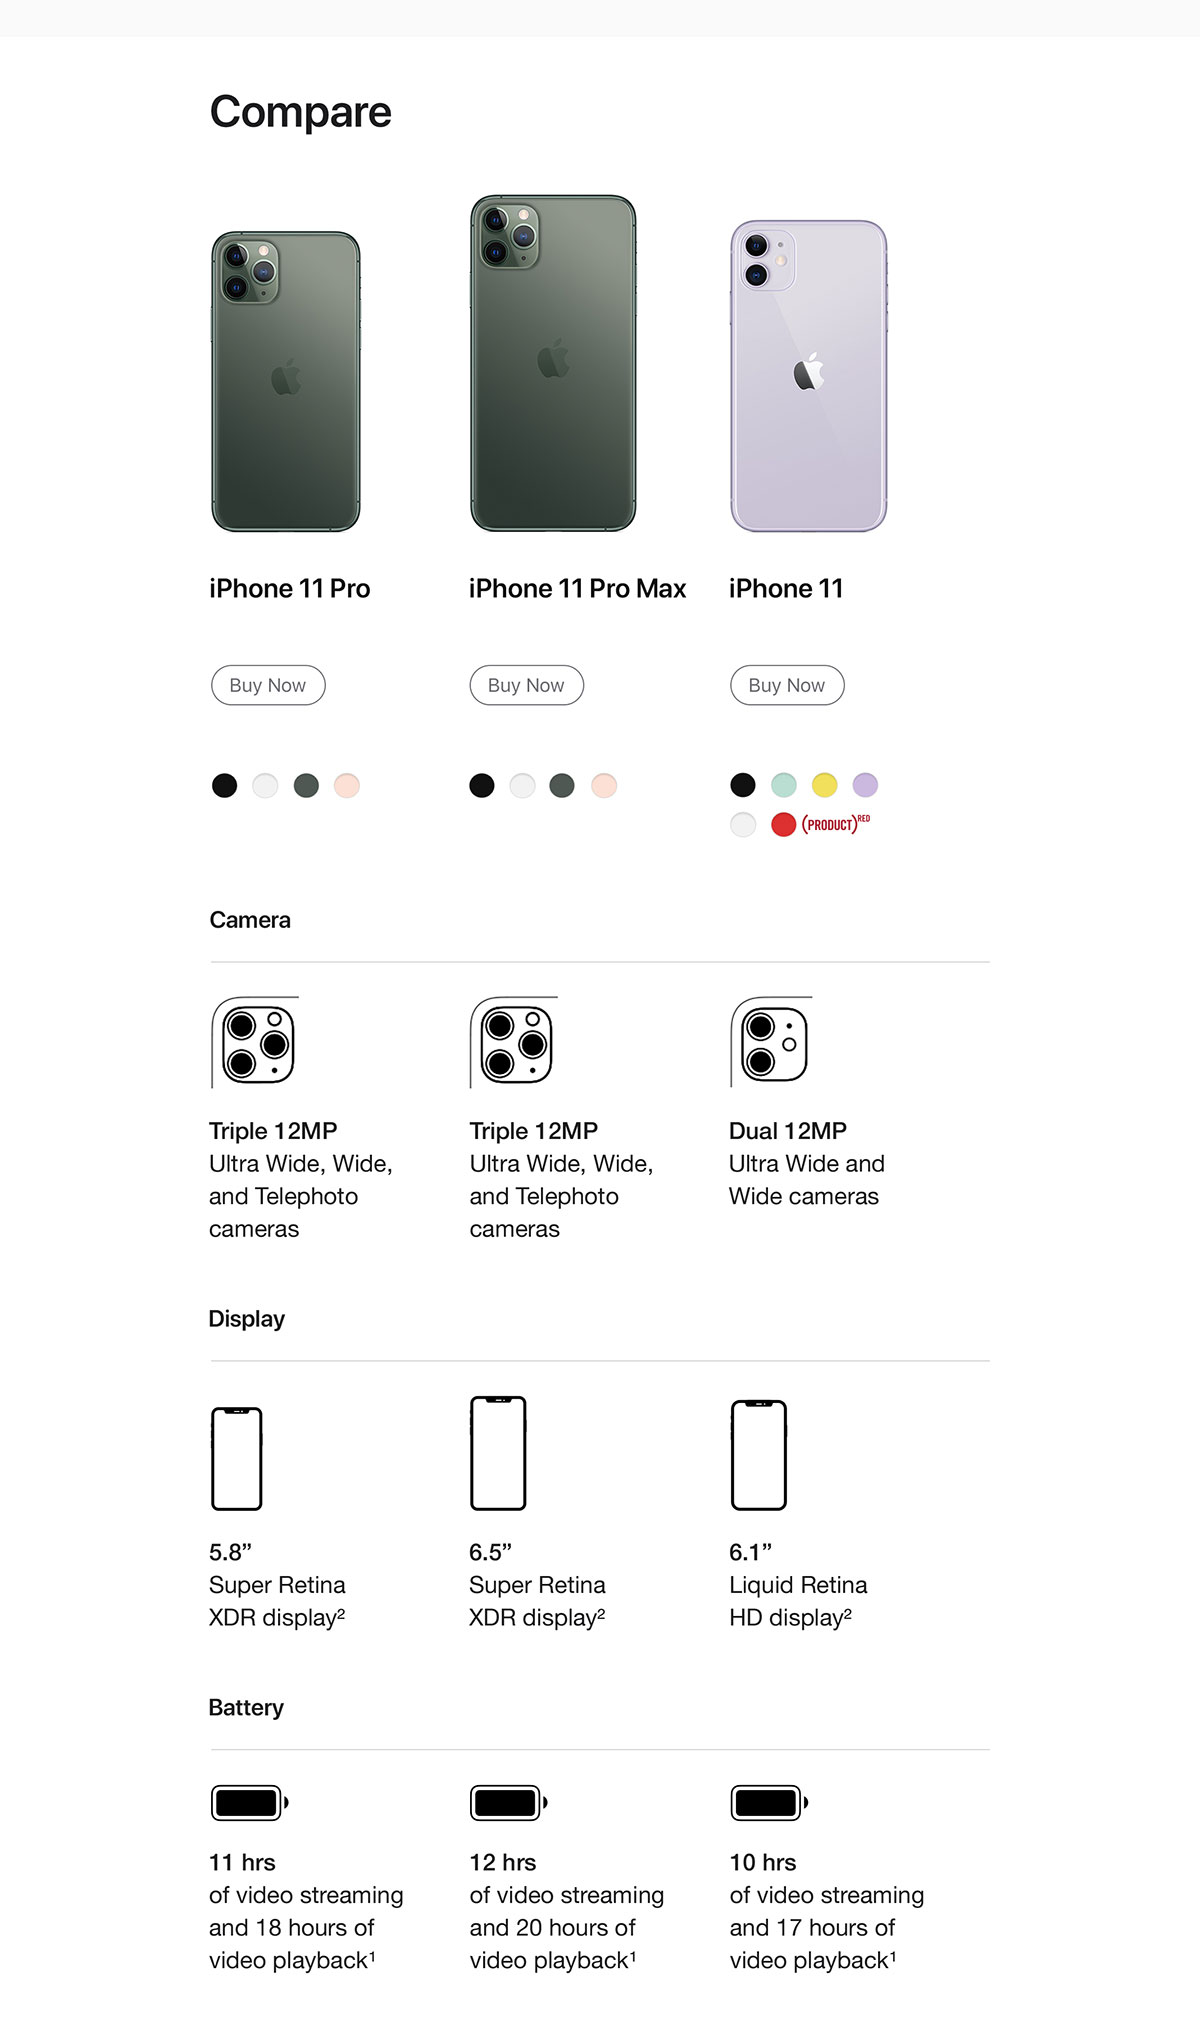 Iphone 7 Price Comparison Chart